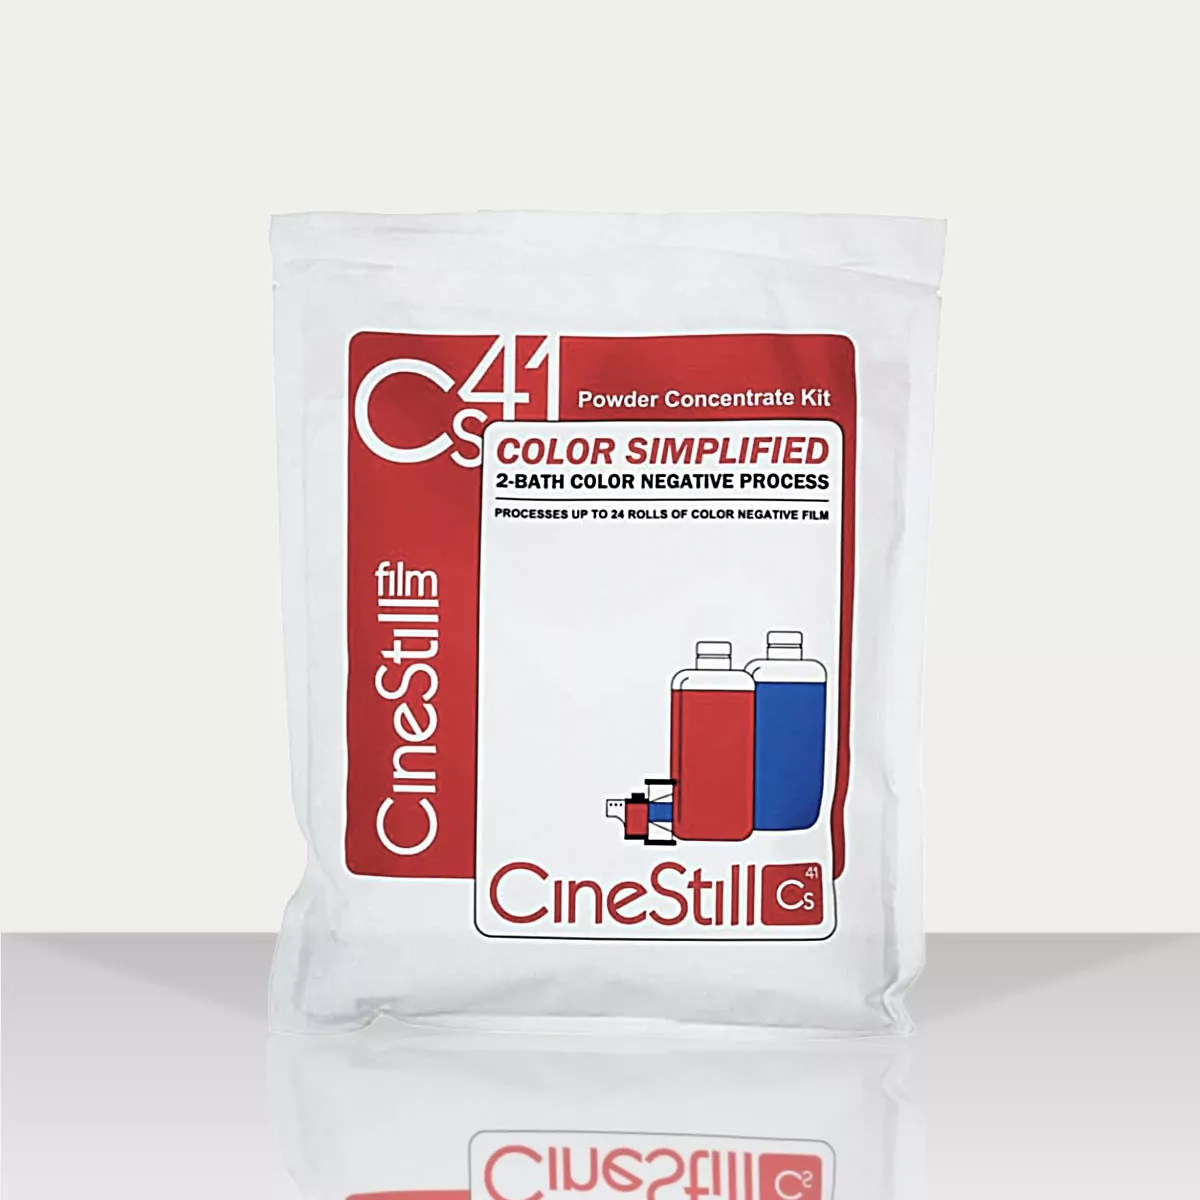 CineStill Cs41 “COLOR SIMPLIFIED” 2-BATH KIT